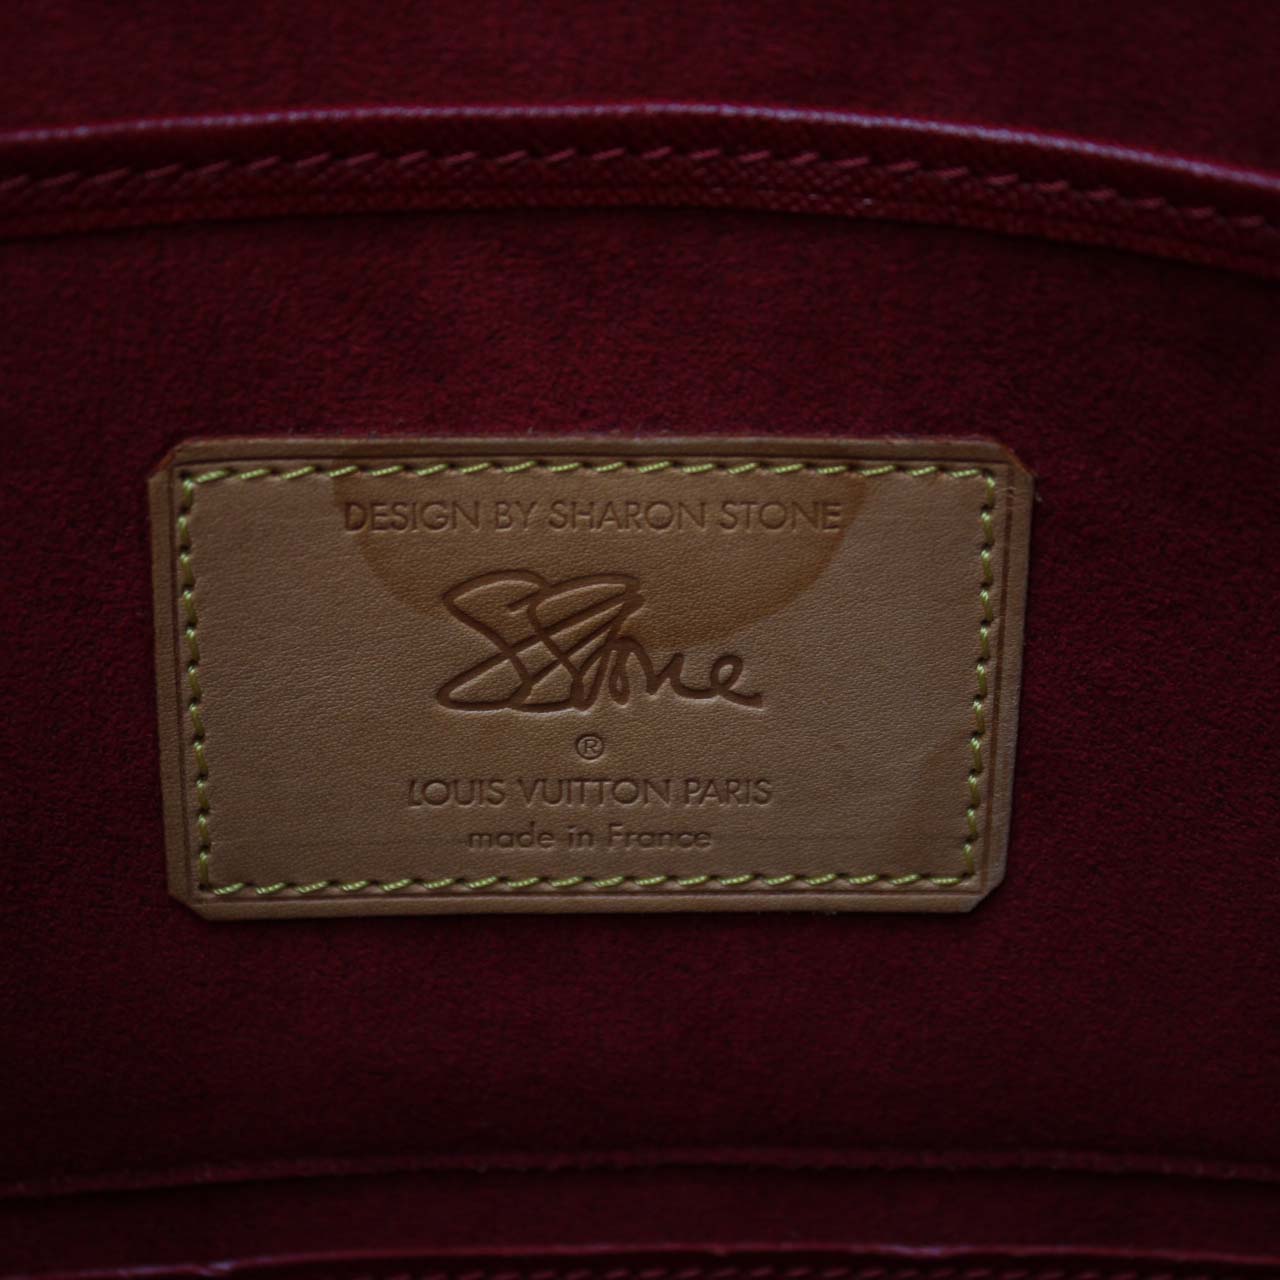 Louis Vuitton X Sharon Stone Amfar Review 